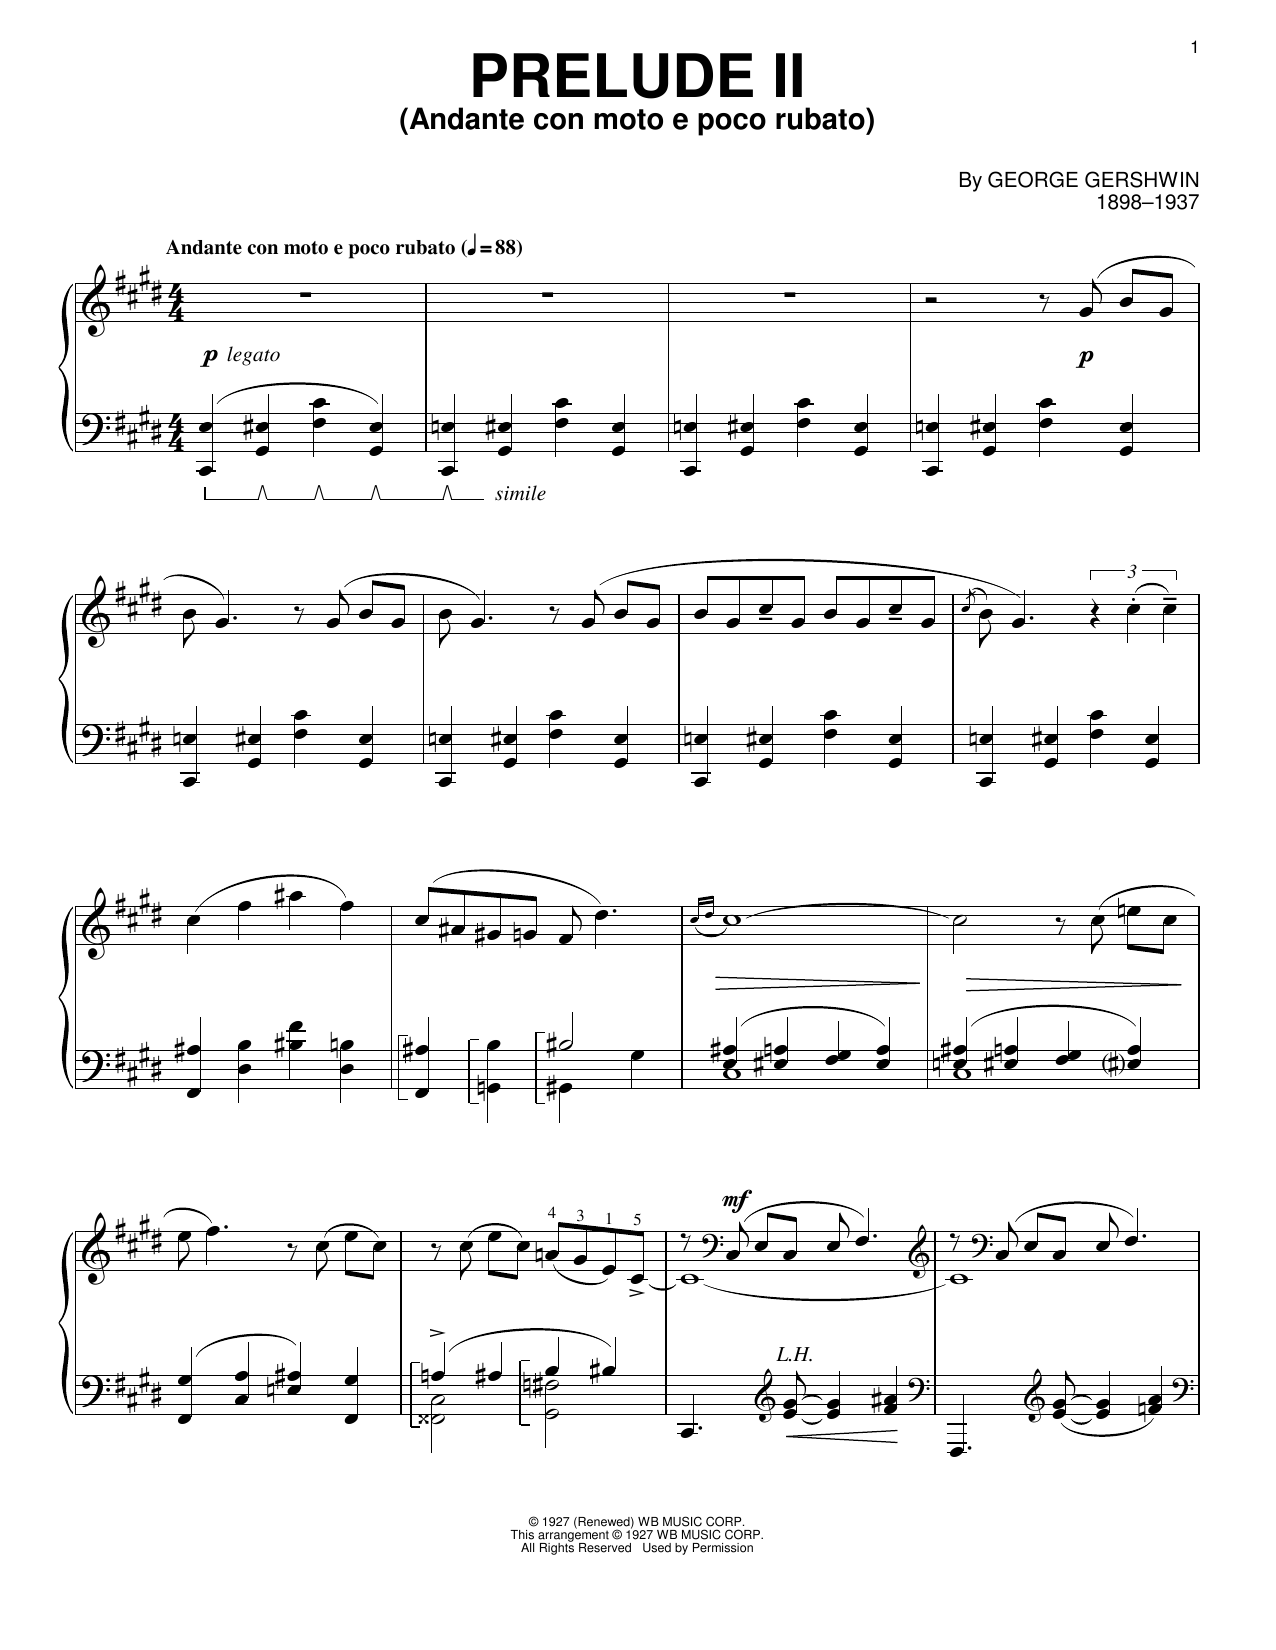 George Gershwin Prelude II (Andante Con Moto E Poco Rubato) Sheet Music Notes & Chords for Flute and Piano - Download or Print PDF